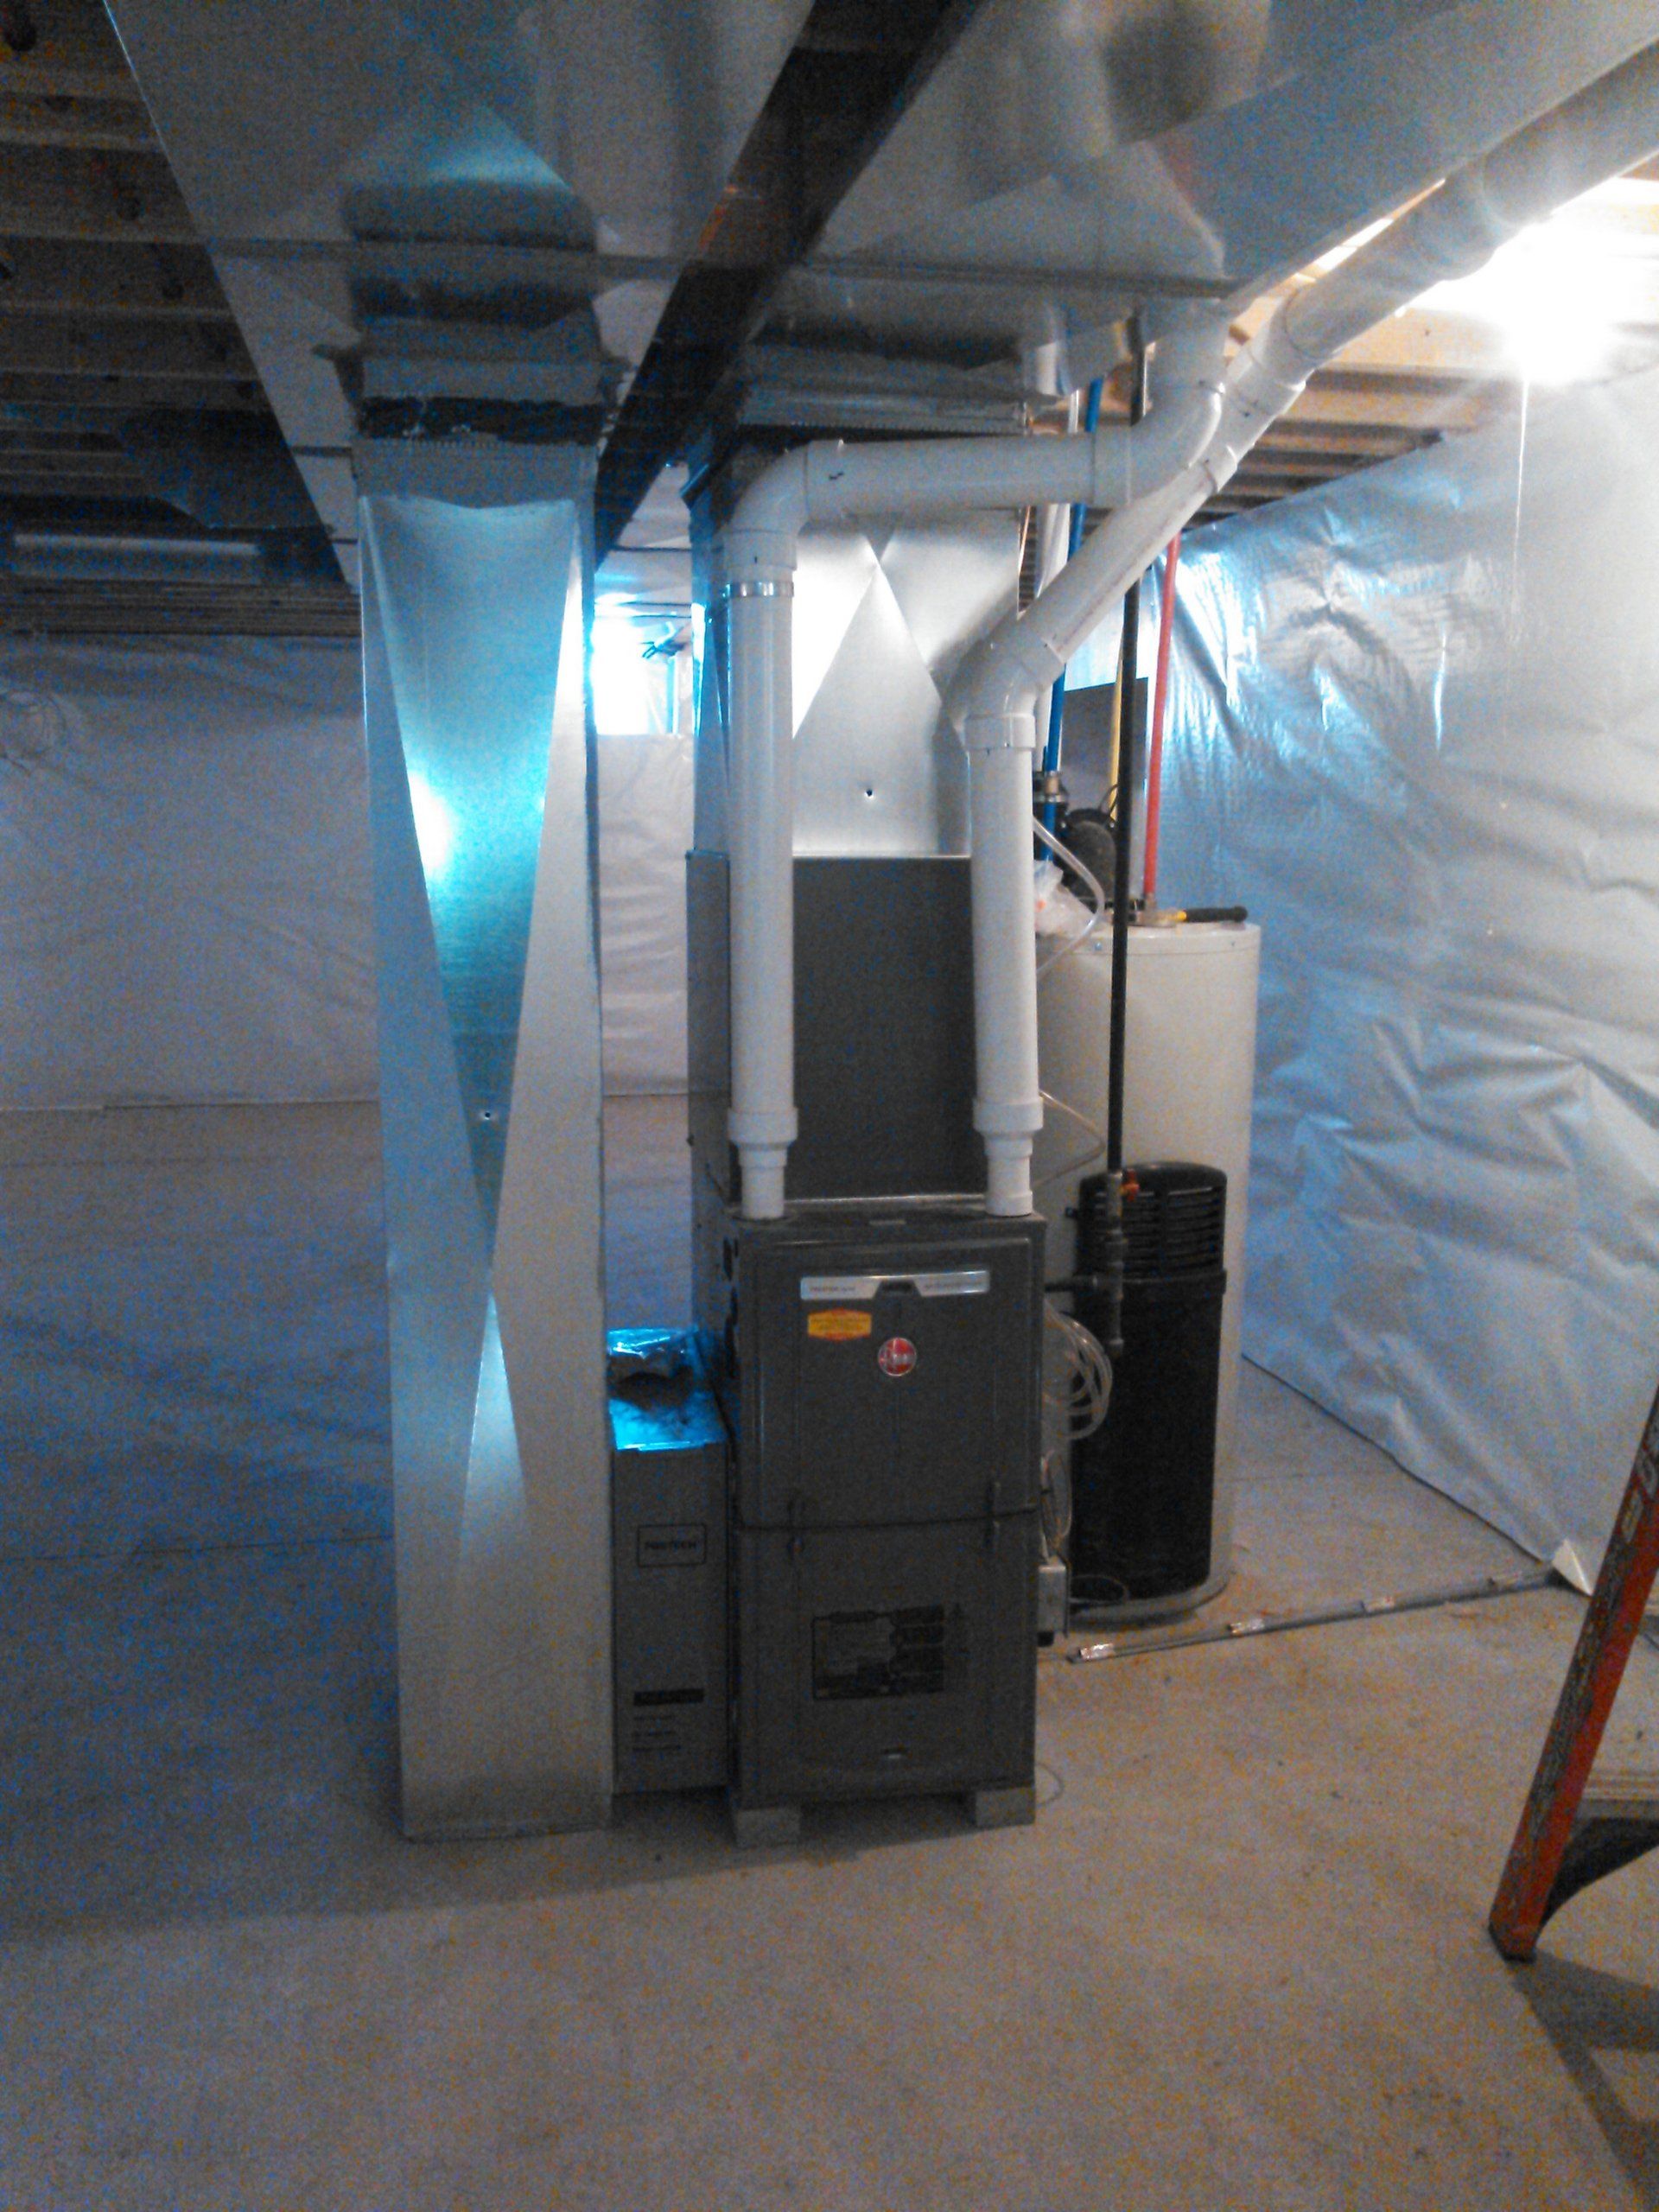 New heater installed in Saratoga Springs, NY